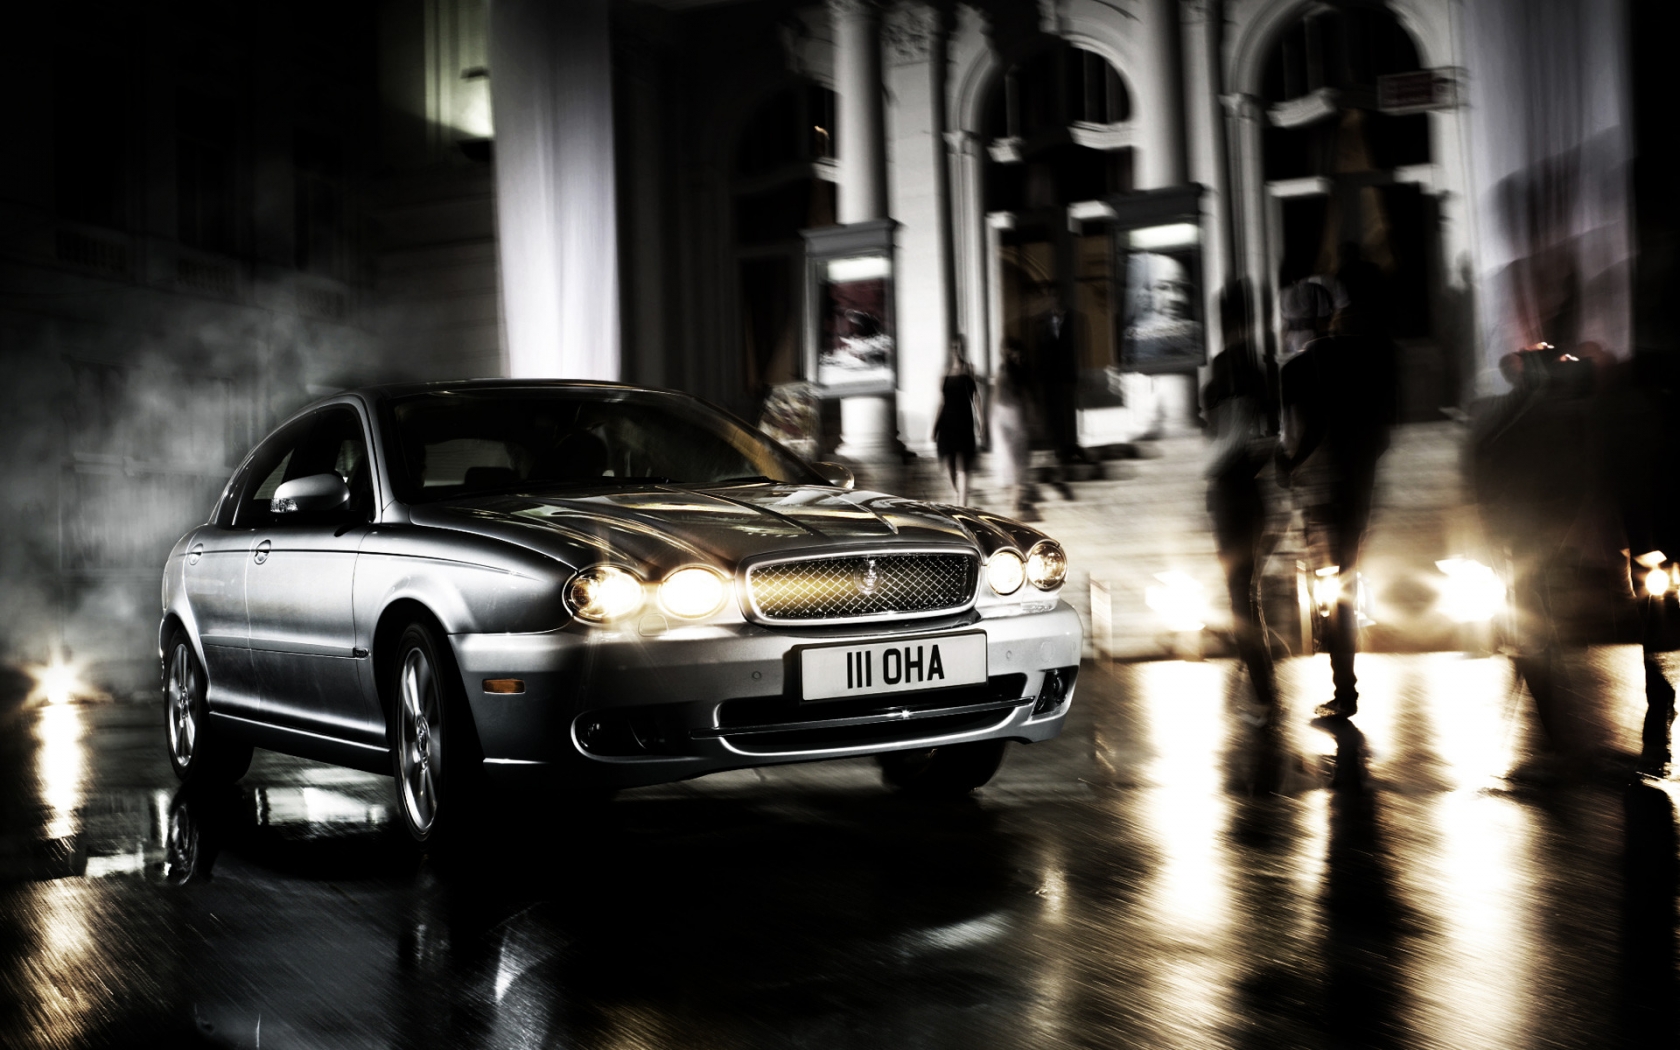 Jaguar X-Type 2008 Rush for 1680 x 1050 widescreen resolution